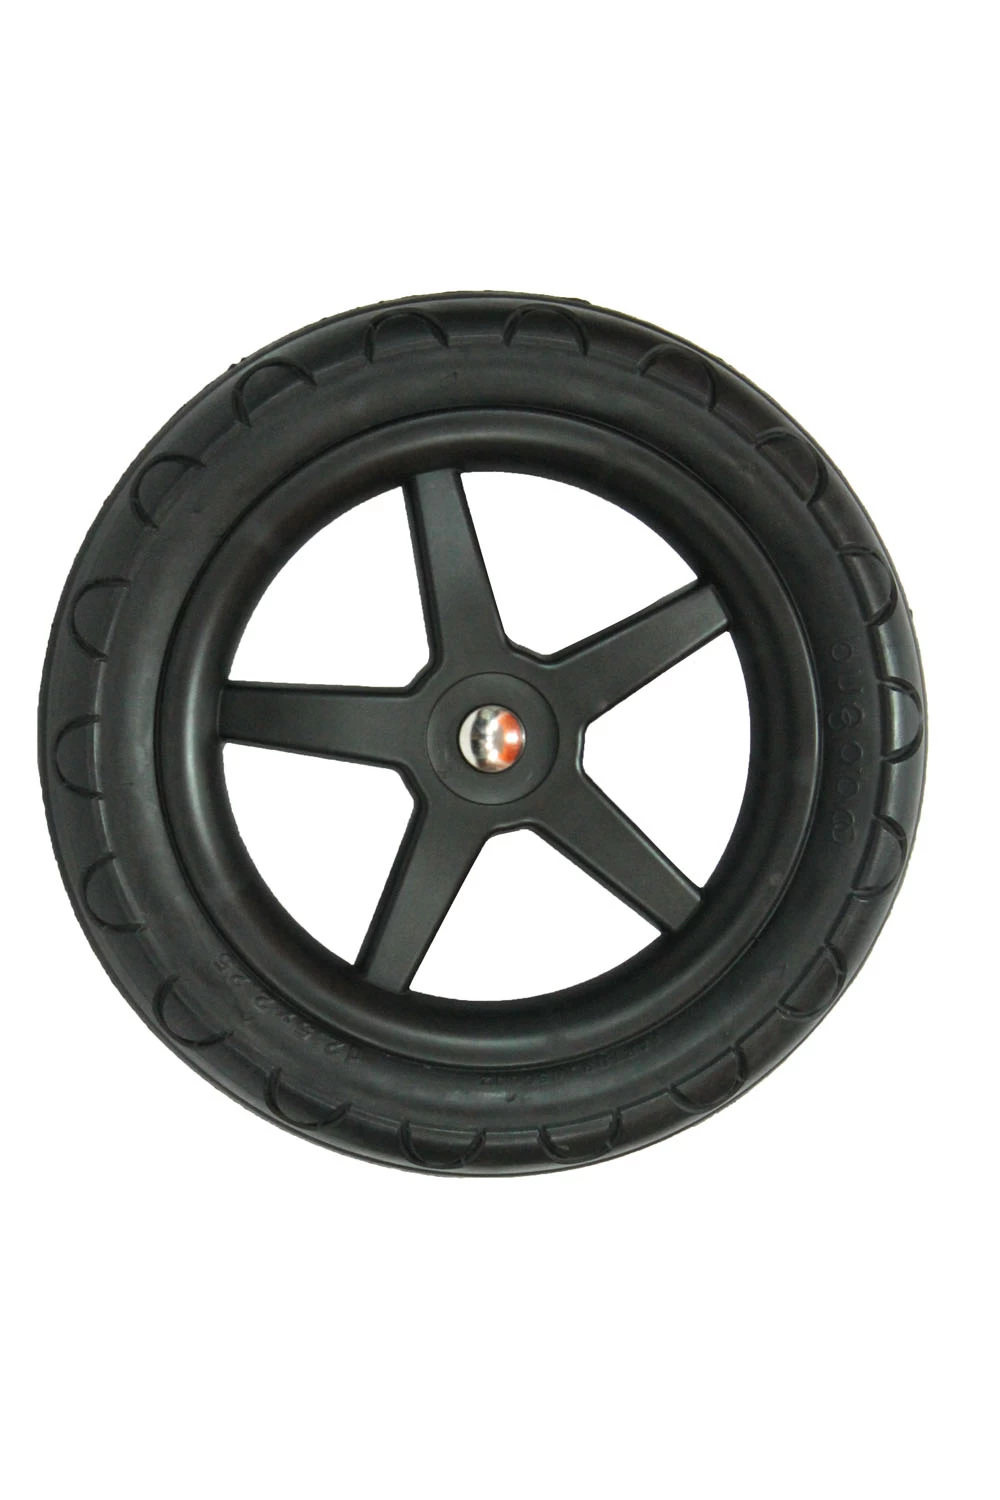 中国 wheelchair pu solid tire,Flat-Free Tire,baby carts tire,custom wheels 制造商